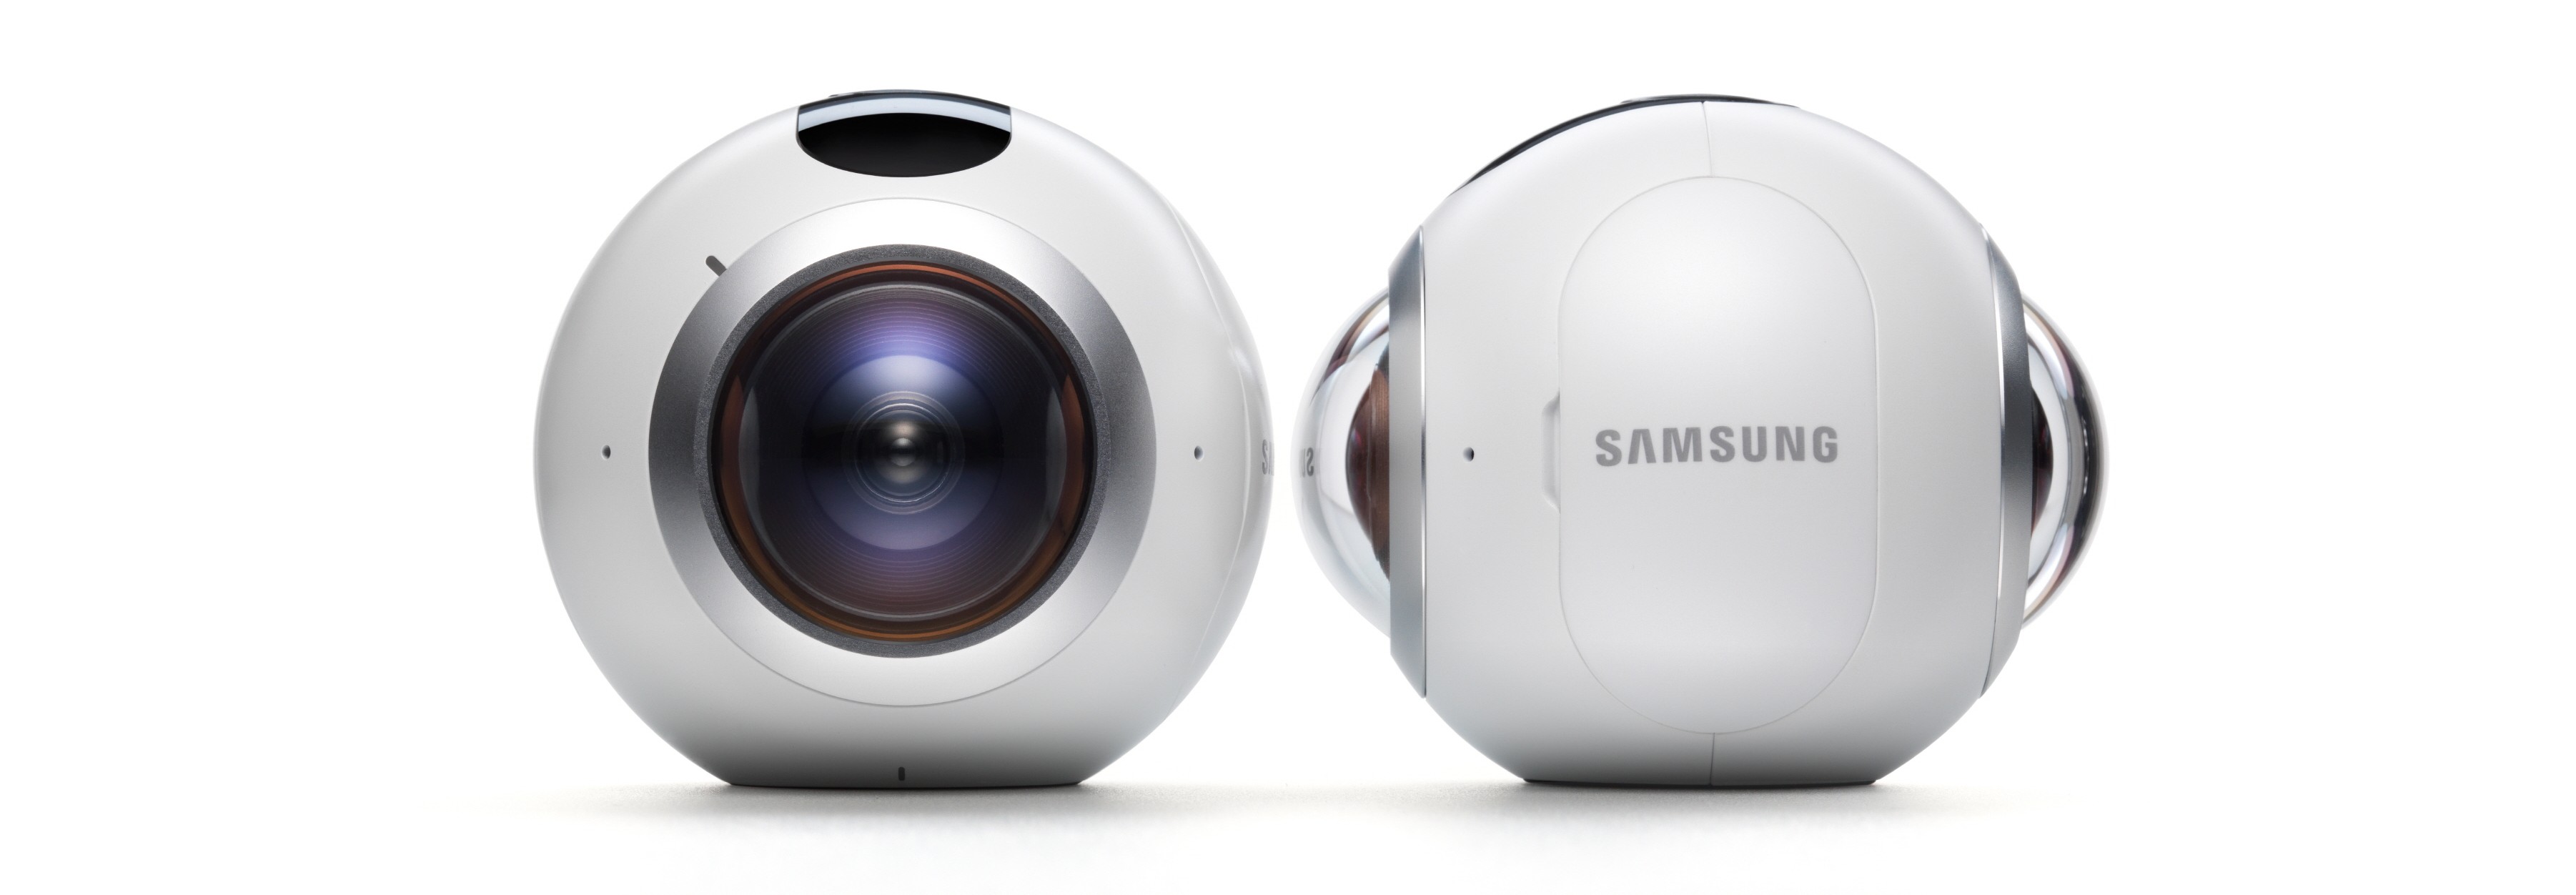 Trillen Voorspellen Behandeling Samsung Reveals The Gear 360 Camera: The Next Step In Its Virtual  Realization | TechCrunch